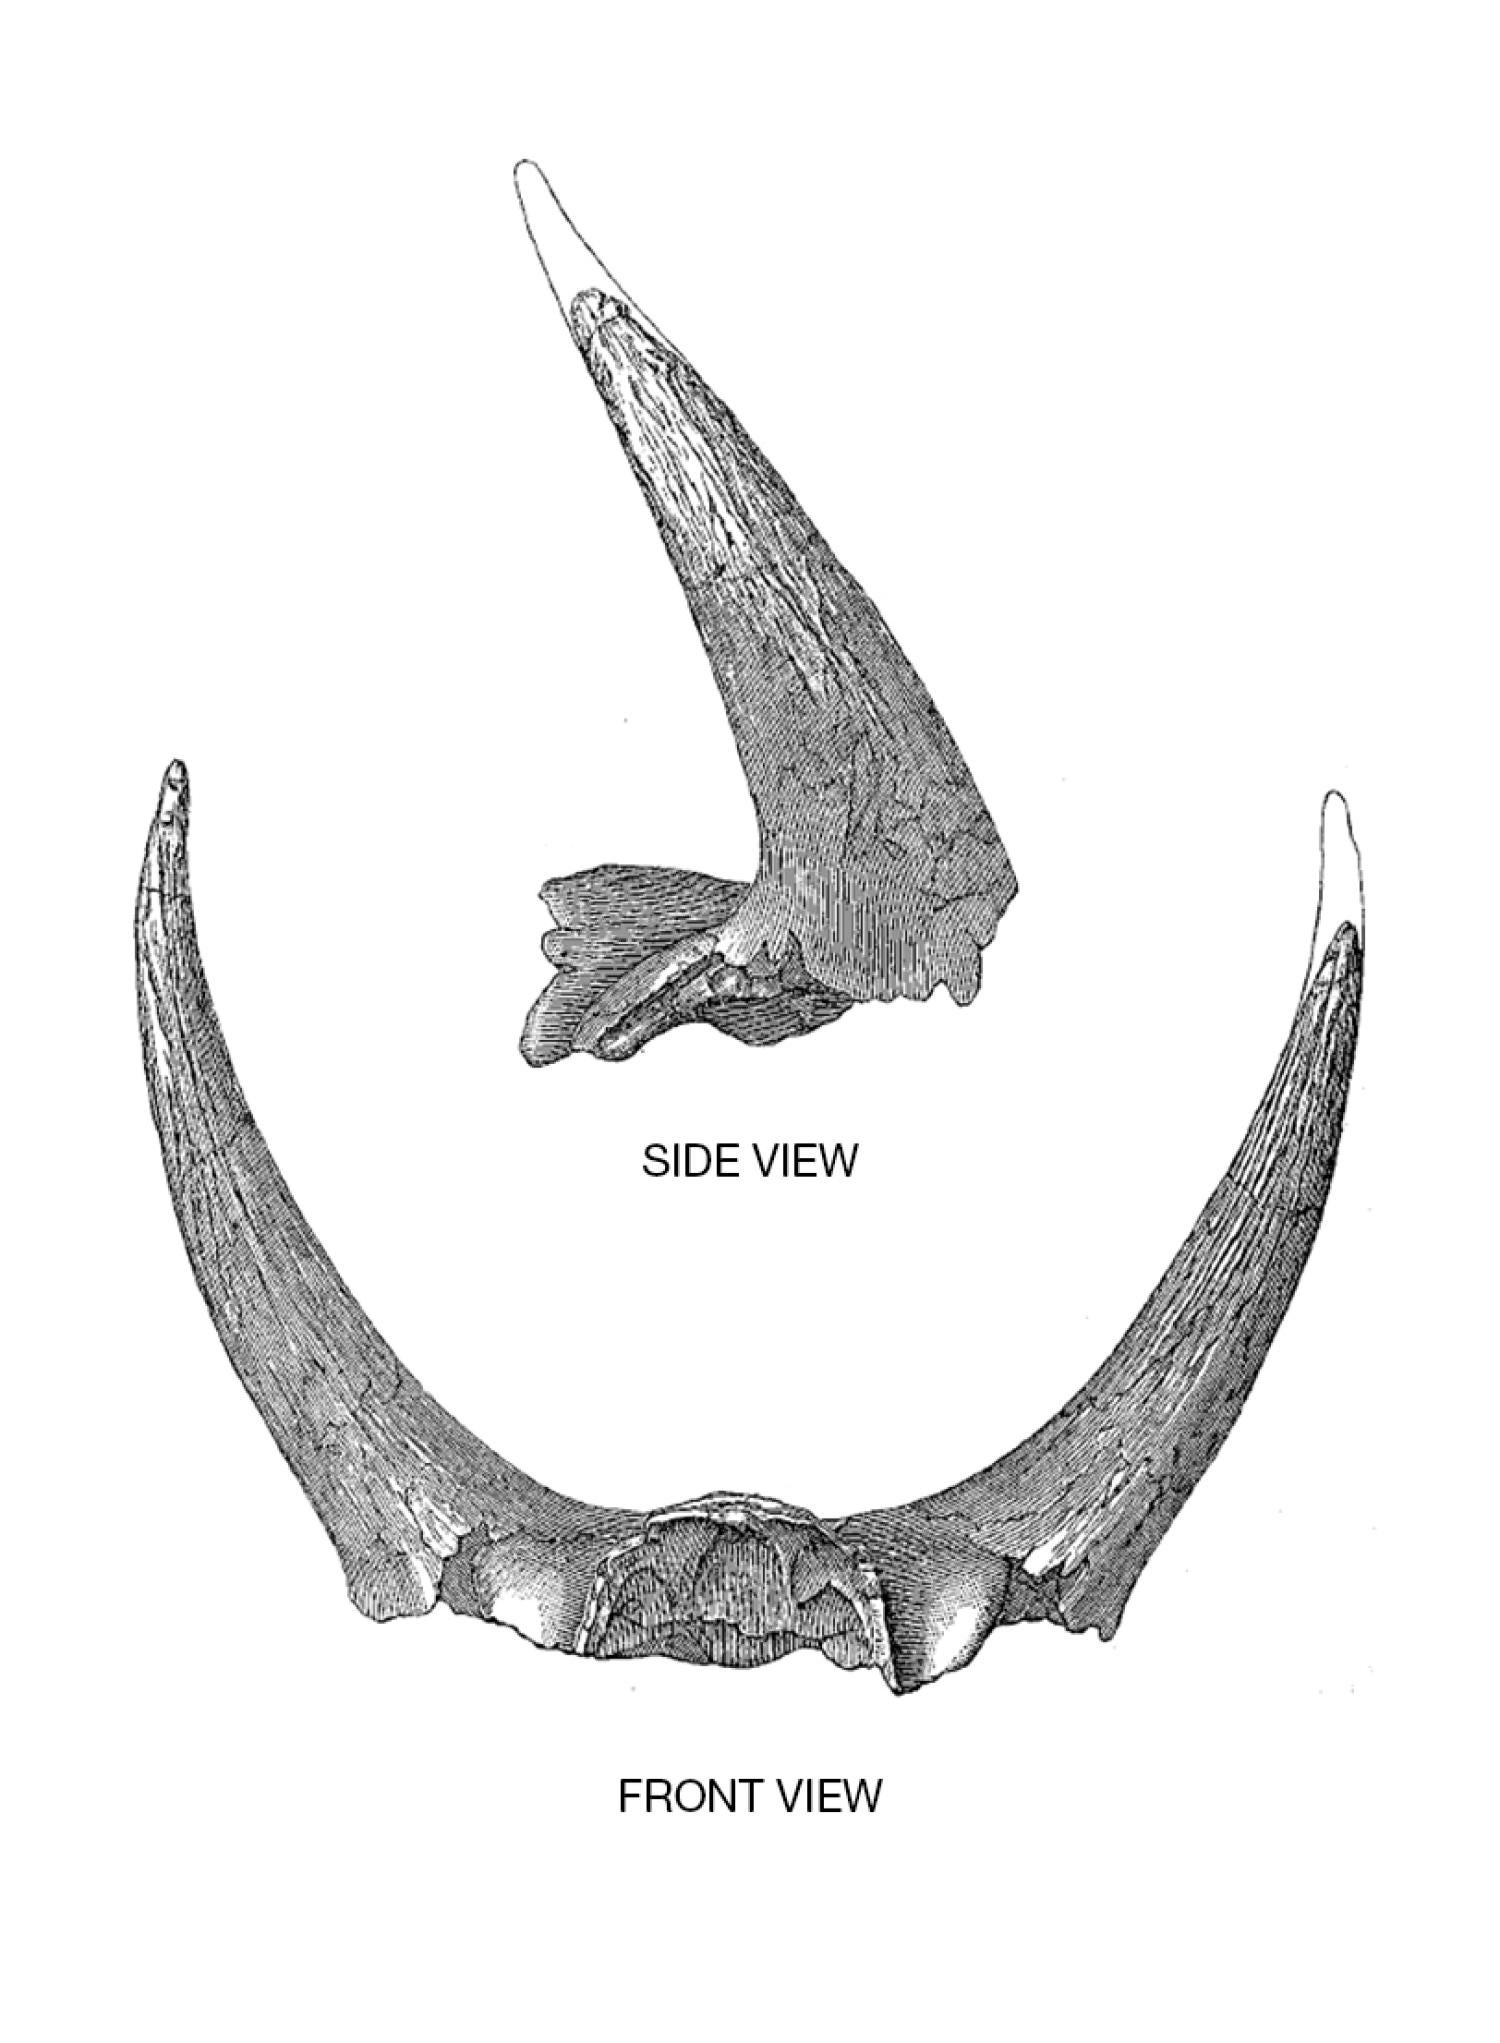 Historical scientific illustration of Triceratops horn fossils